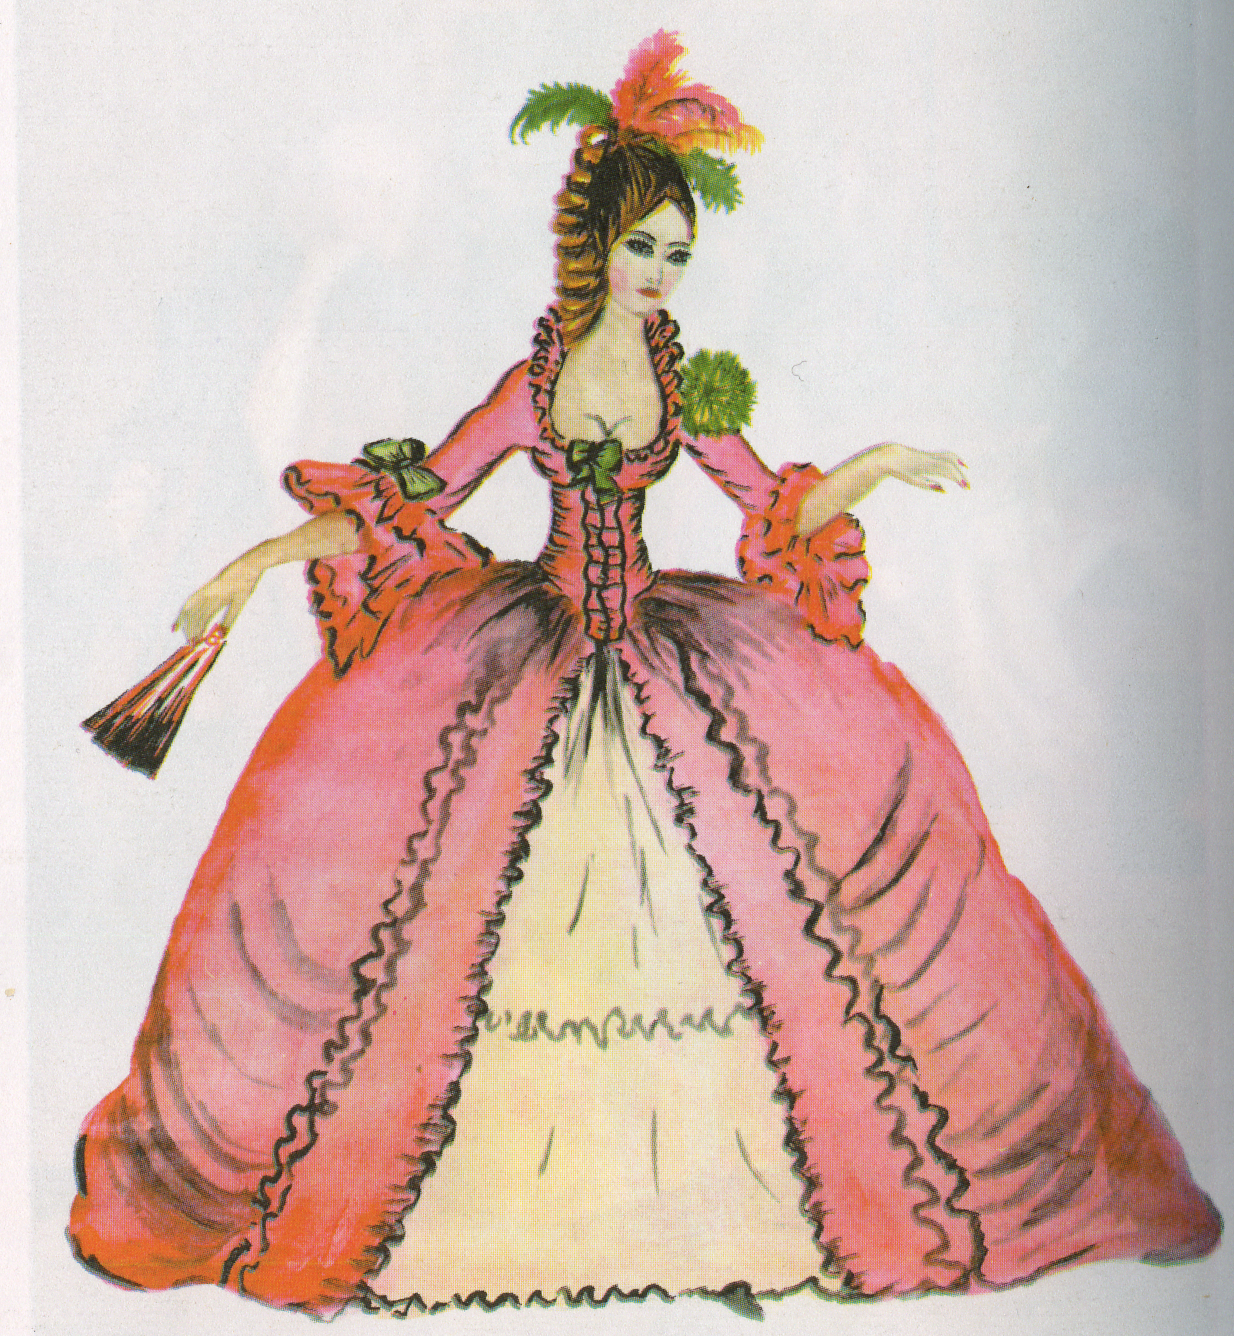 Костюм на бал рисунок. Костюм эпохи Барокко. Платья эпохи Барокко. Французский костюм стиля Барокко. Платье в стиле Барокко рисунок.